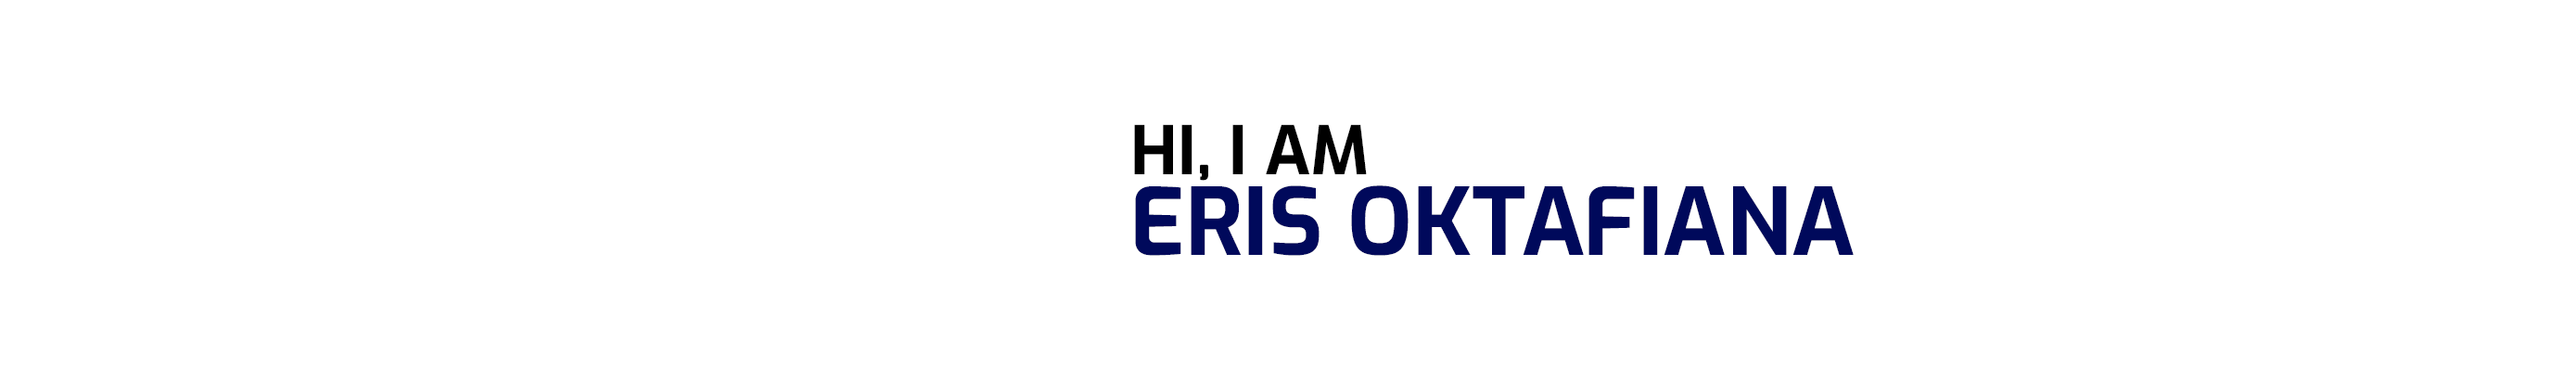 Banner de perfil de Eris Oktafiana